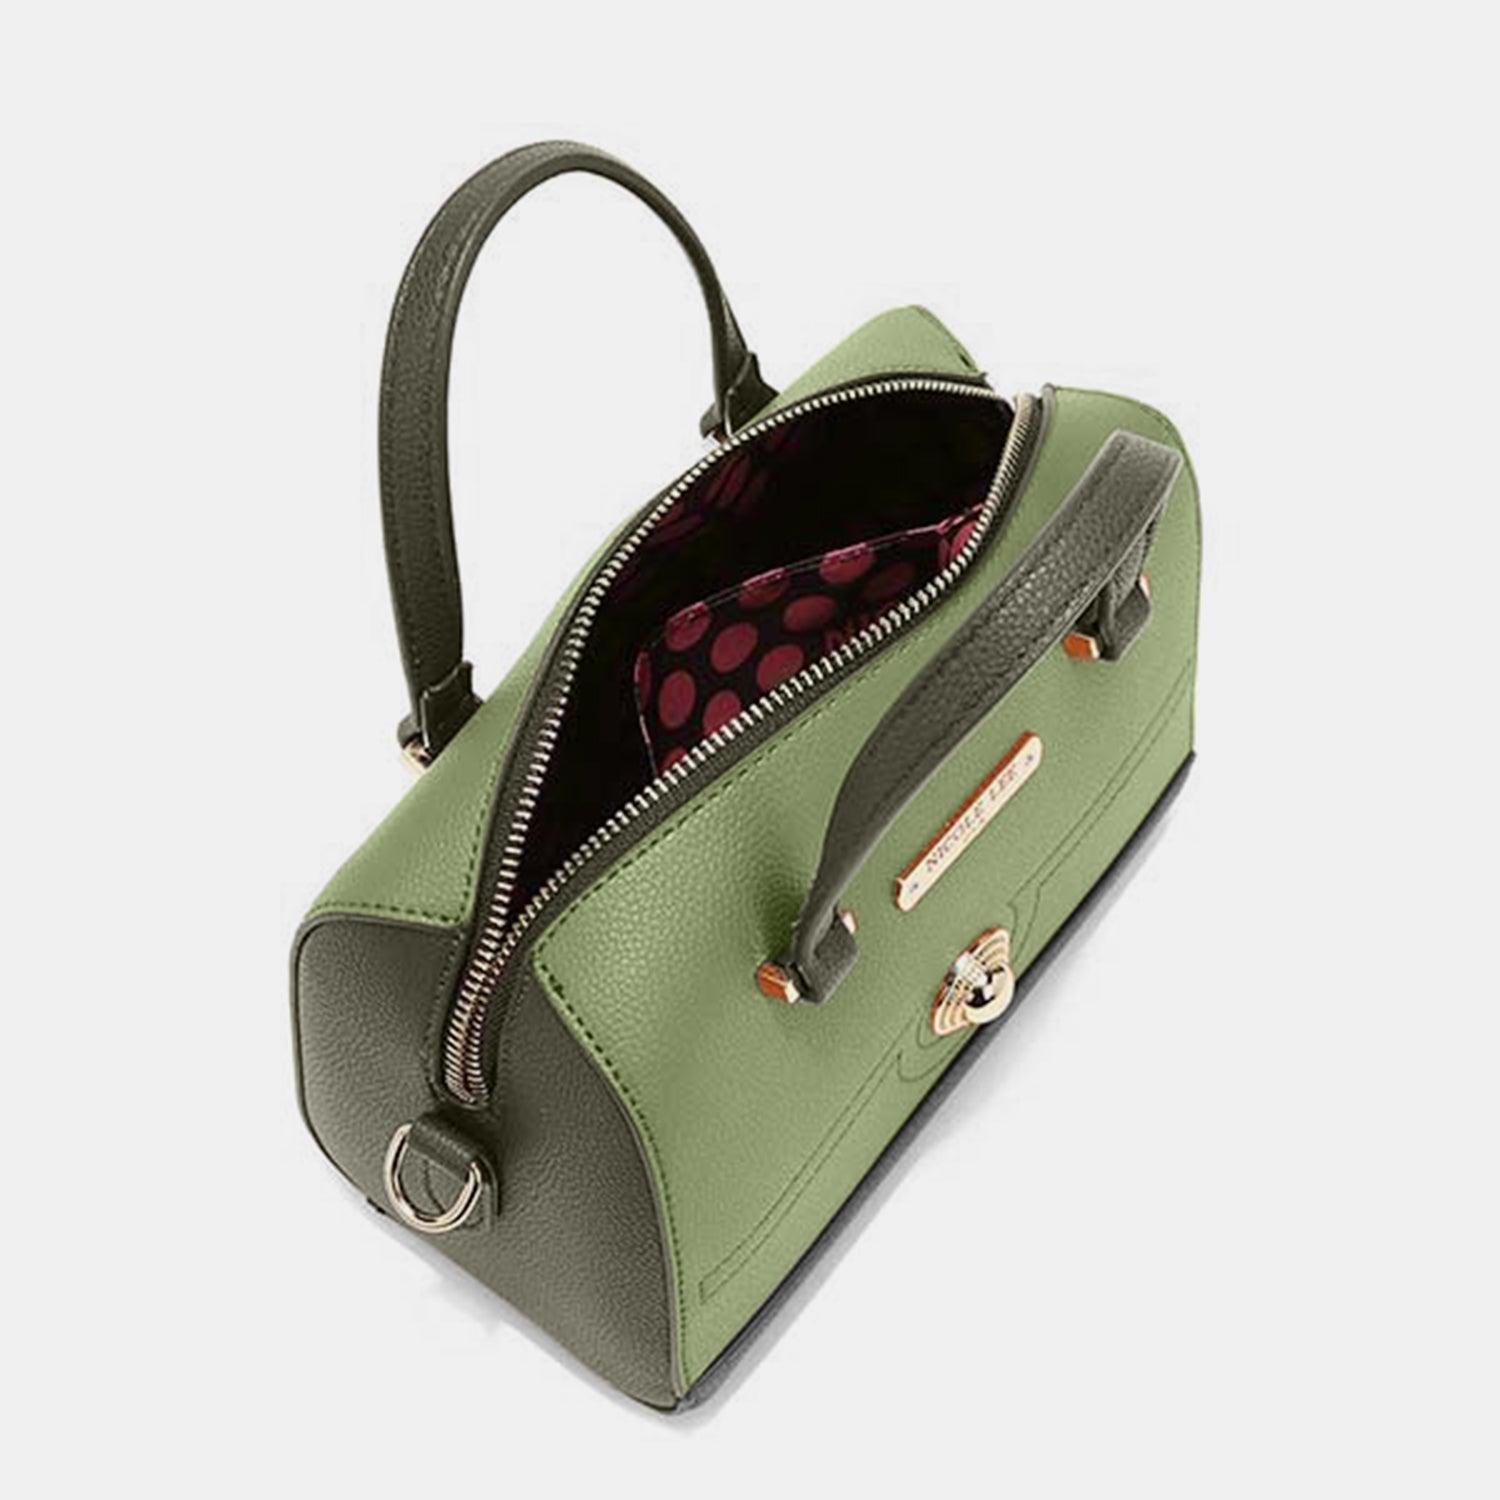 a green handbag with a red polka dot lining